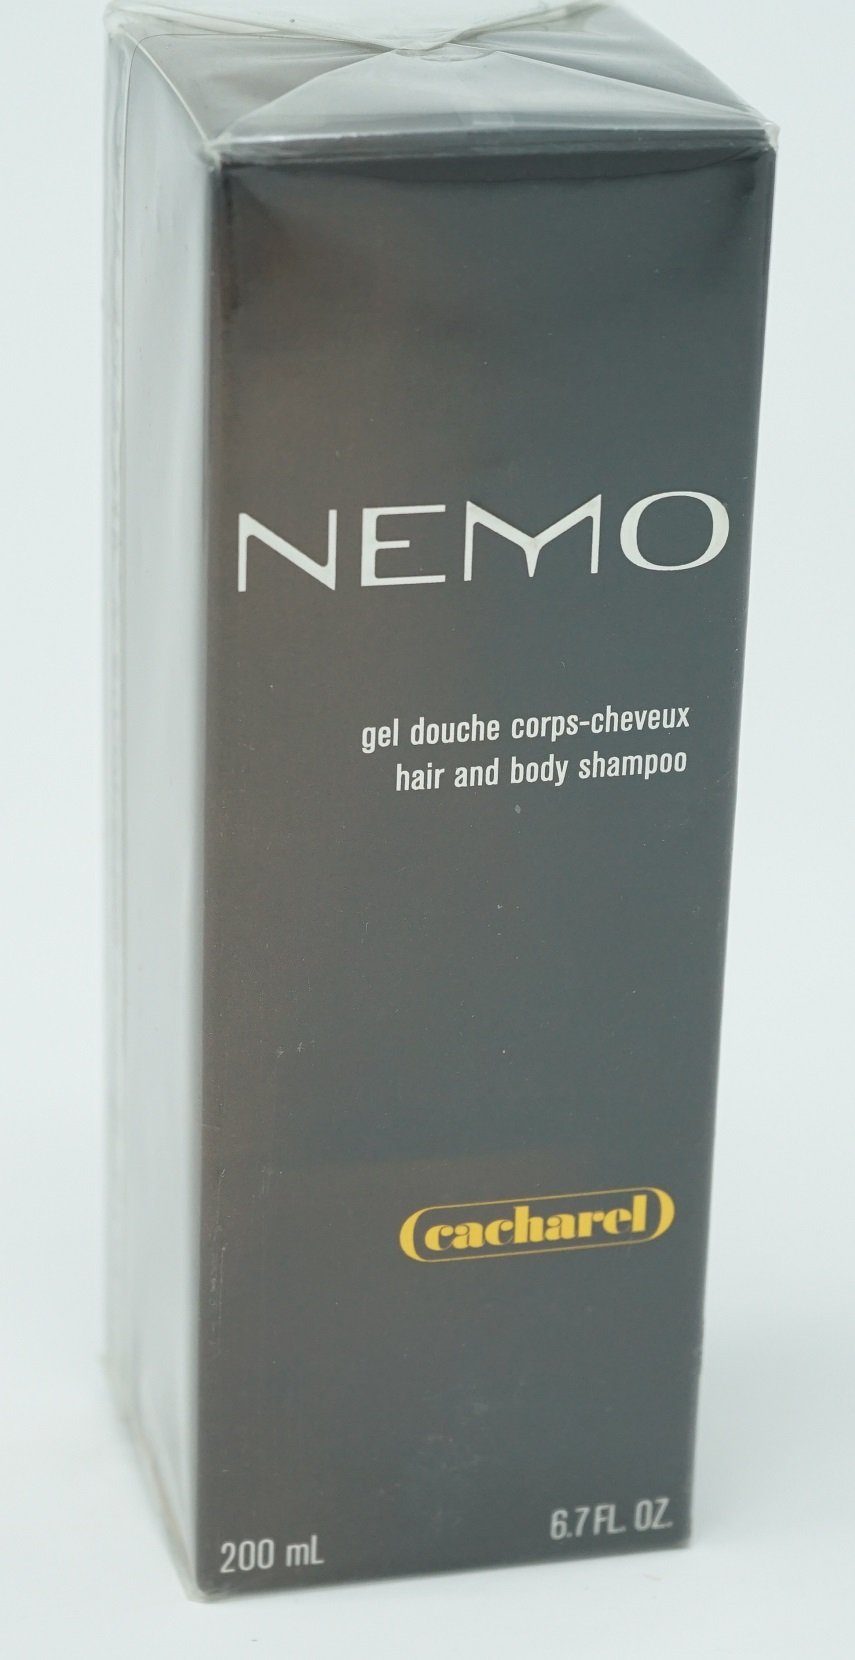 CACHAREL Haarshampoo 200 and Shampoo Body ml Cacharel NEMO Hair